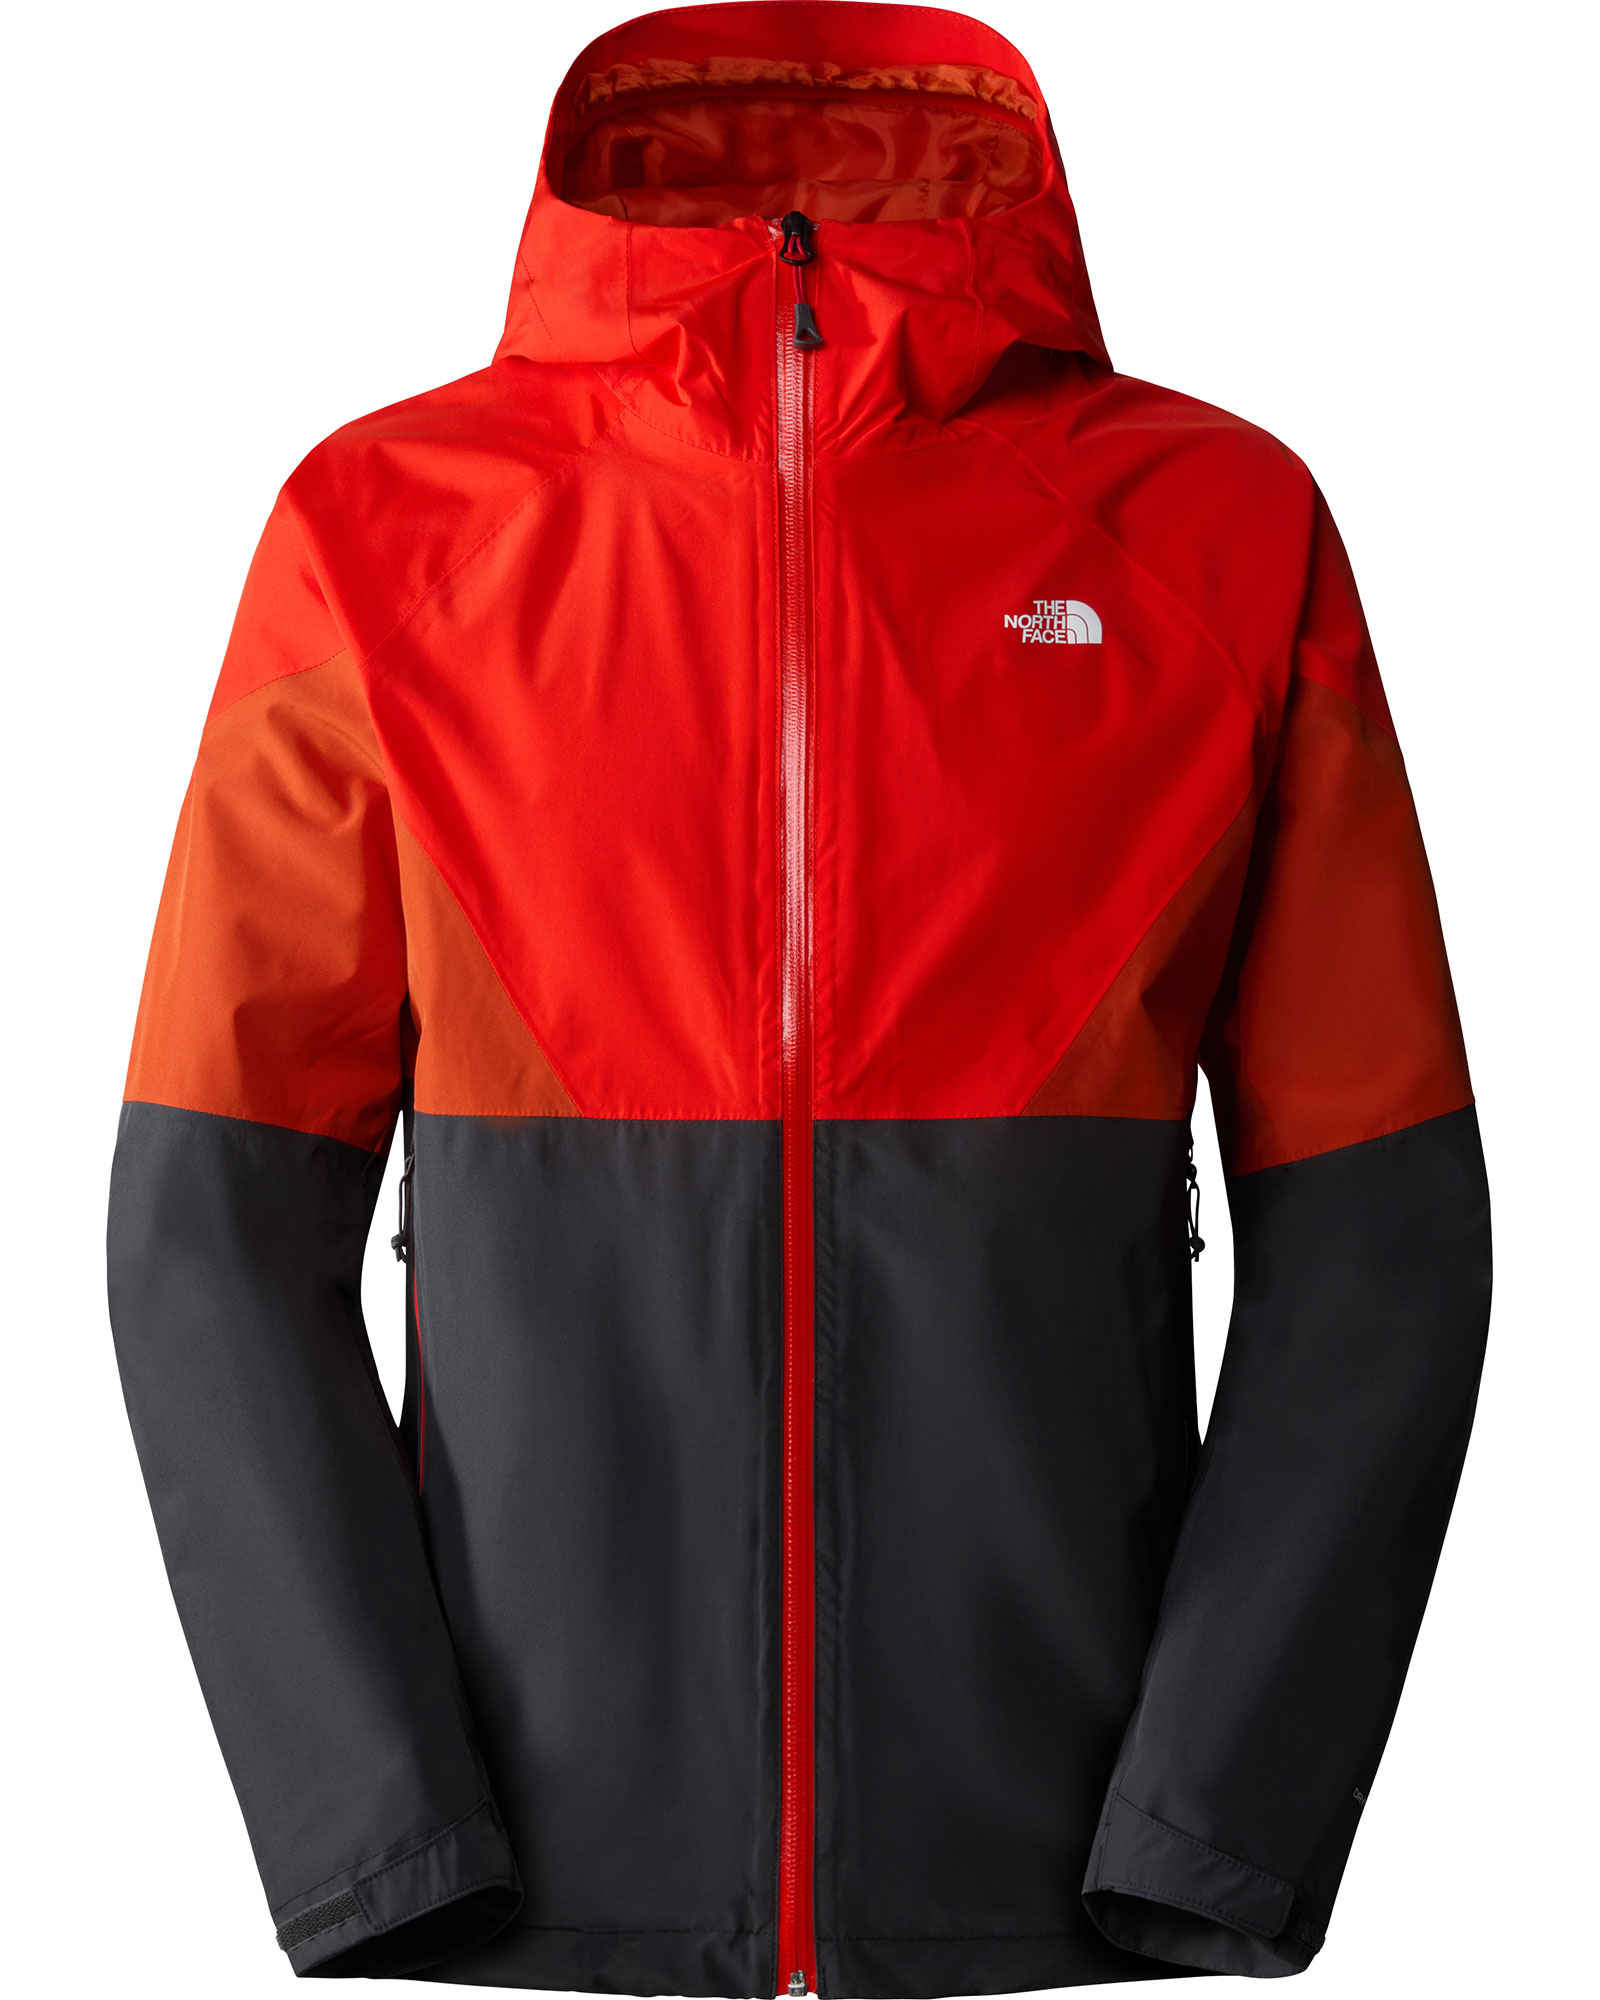 The North Face Lightning Men’s Jacket - Asphalt Grey/Fiery Red L